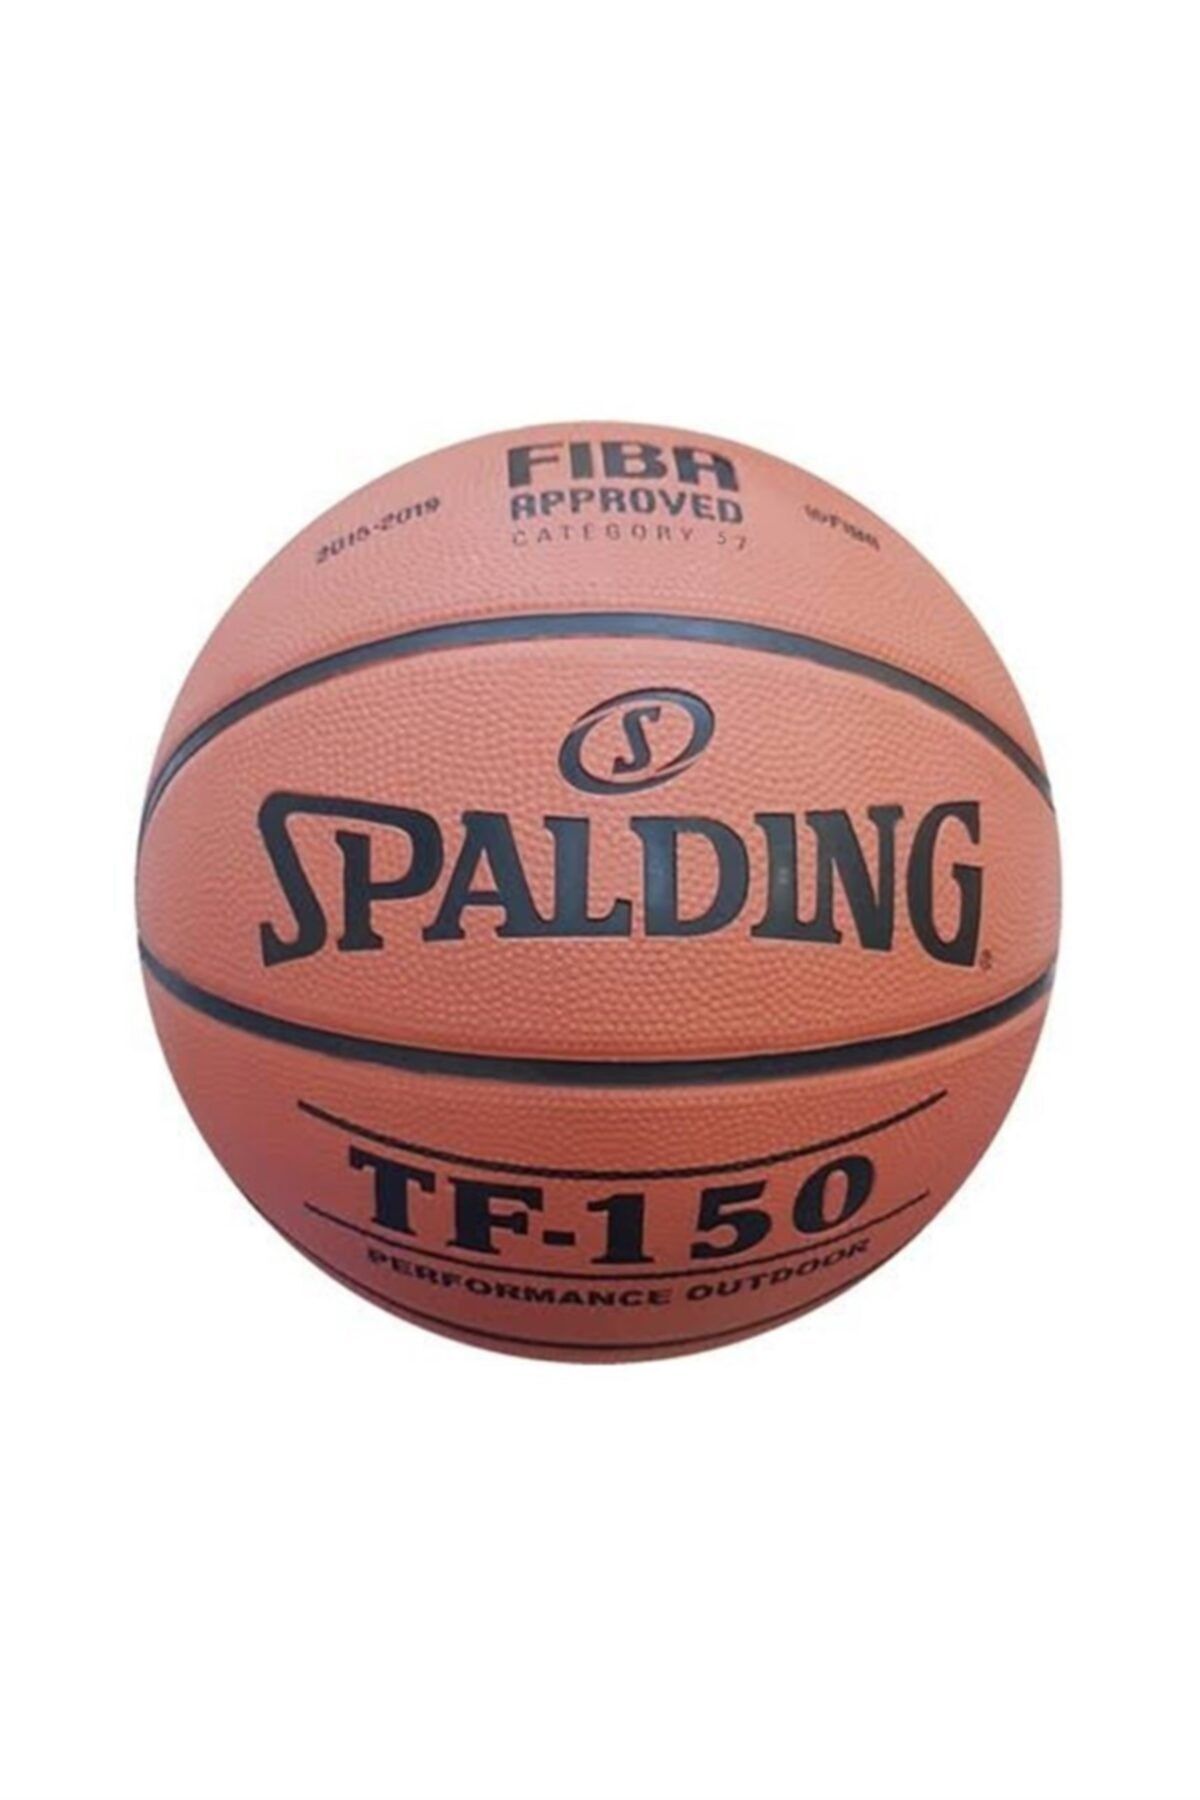 Spalding Basket Topu Tf-150 Perform Sıze 6 Fıba Logo